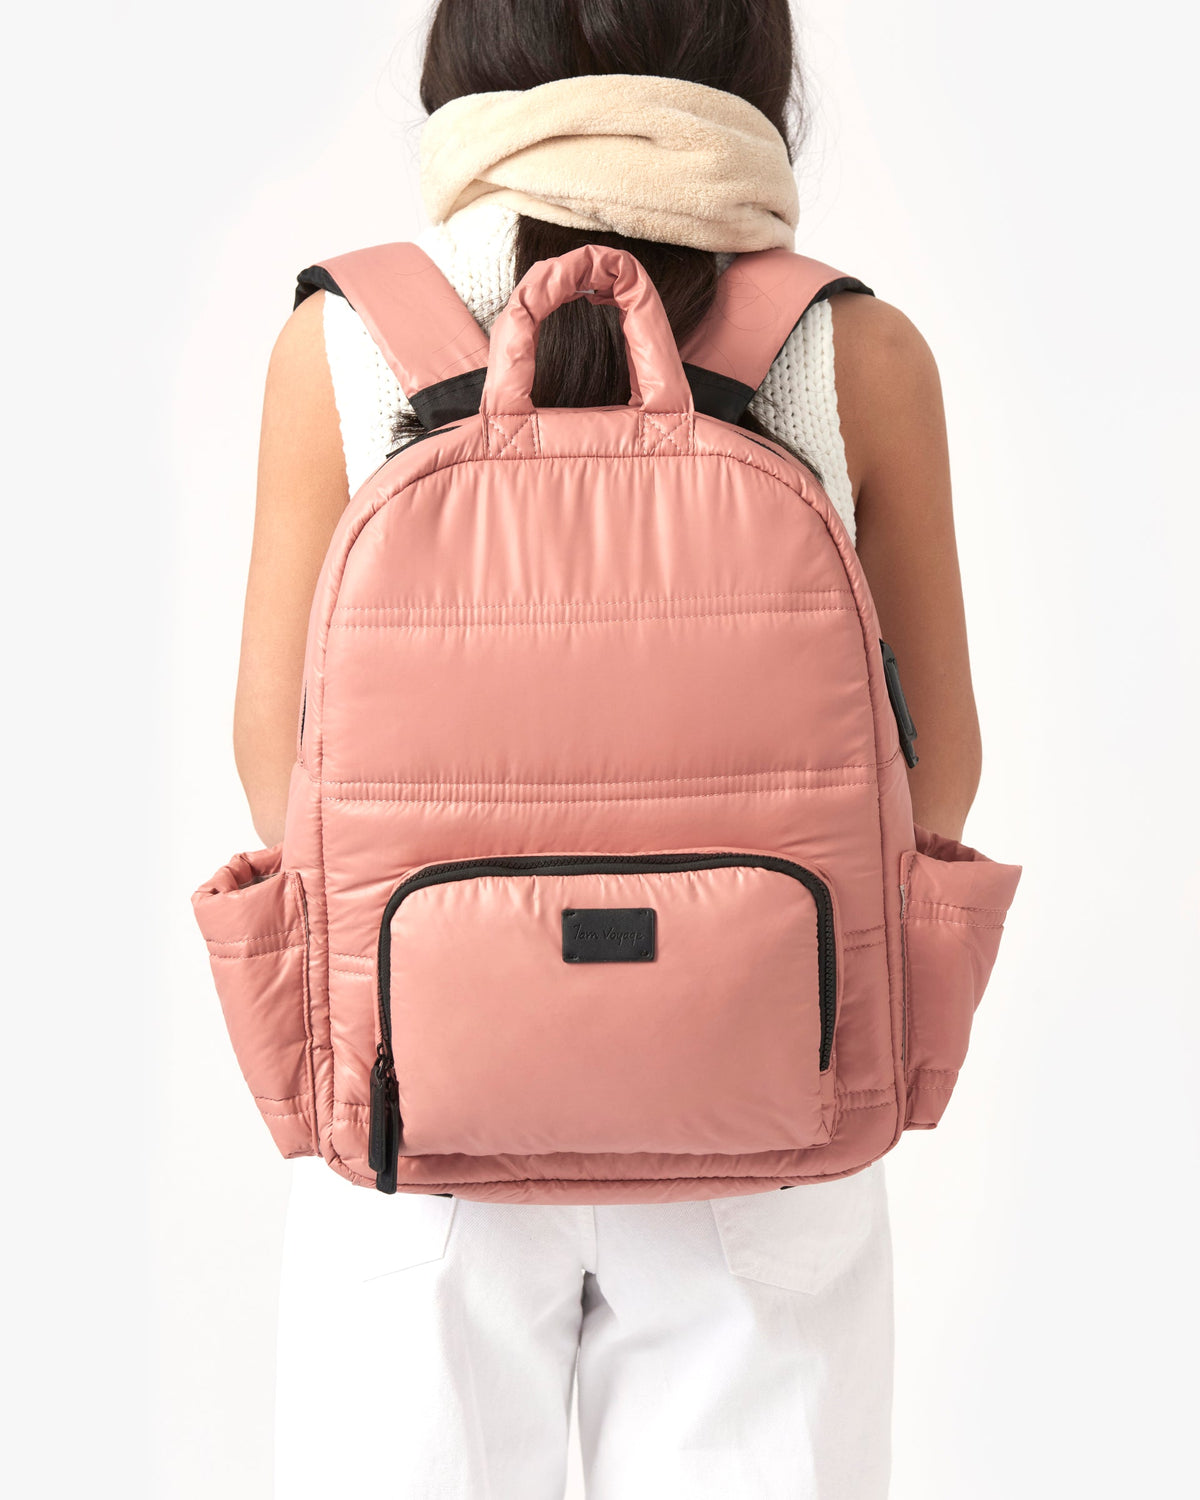 BK718 Backpack Diaper Bag